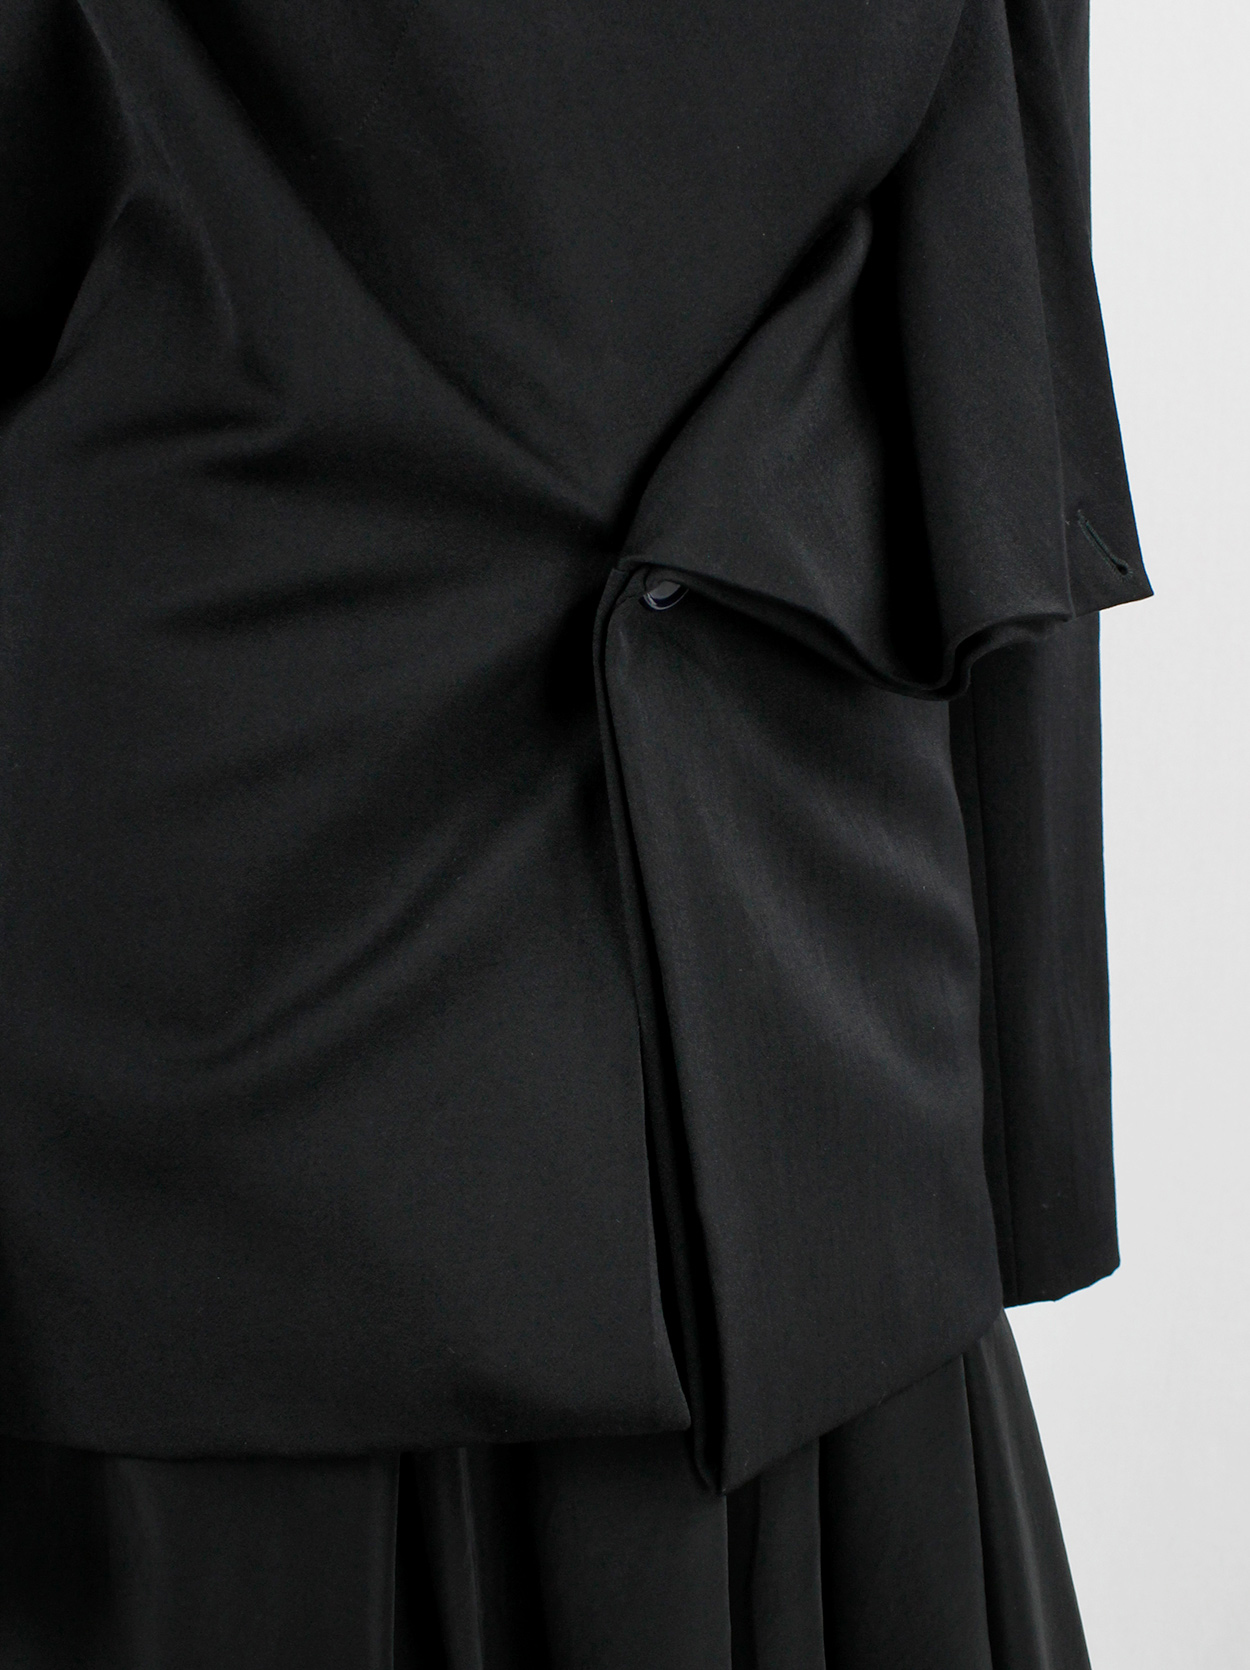 Yohji Yamamoto black asymmetric jacket with double folded draped front ...